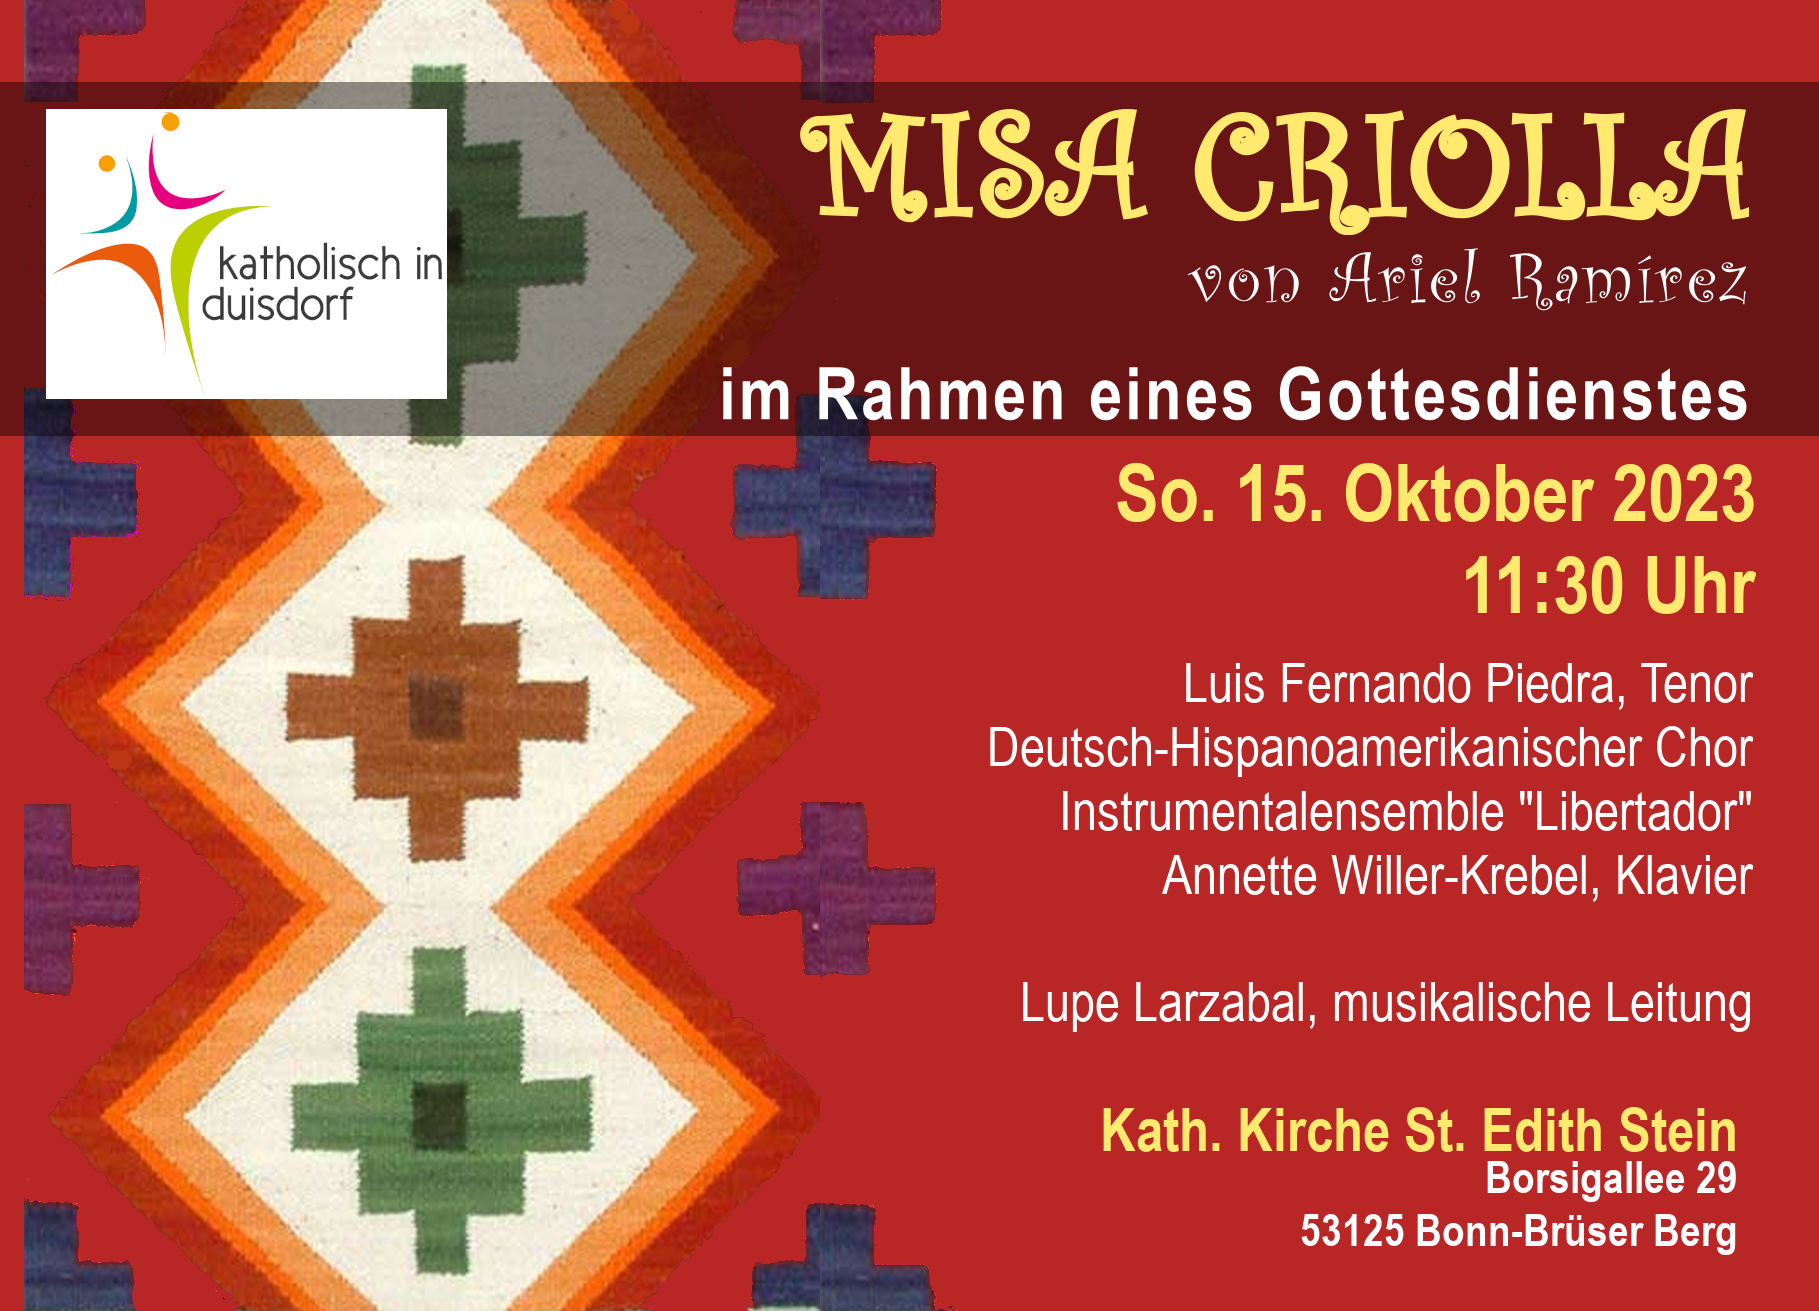 Postkarte Misa Criolla 2023 Brüser Berg